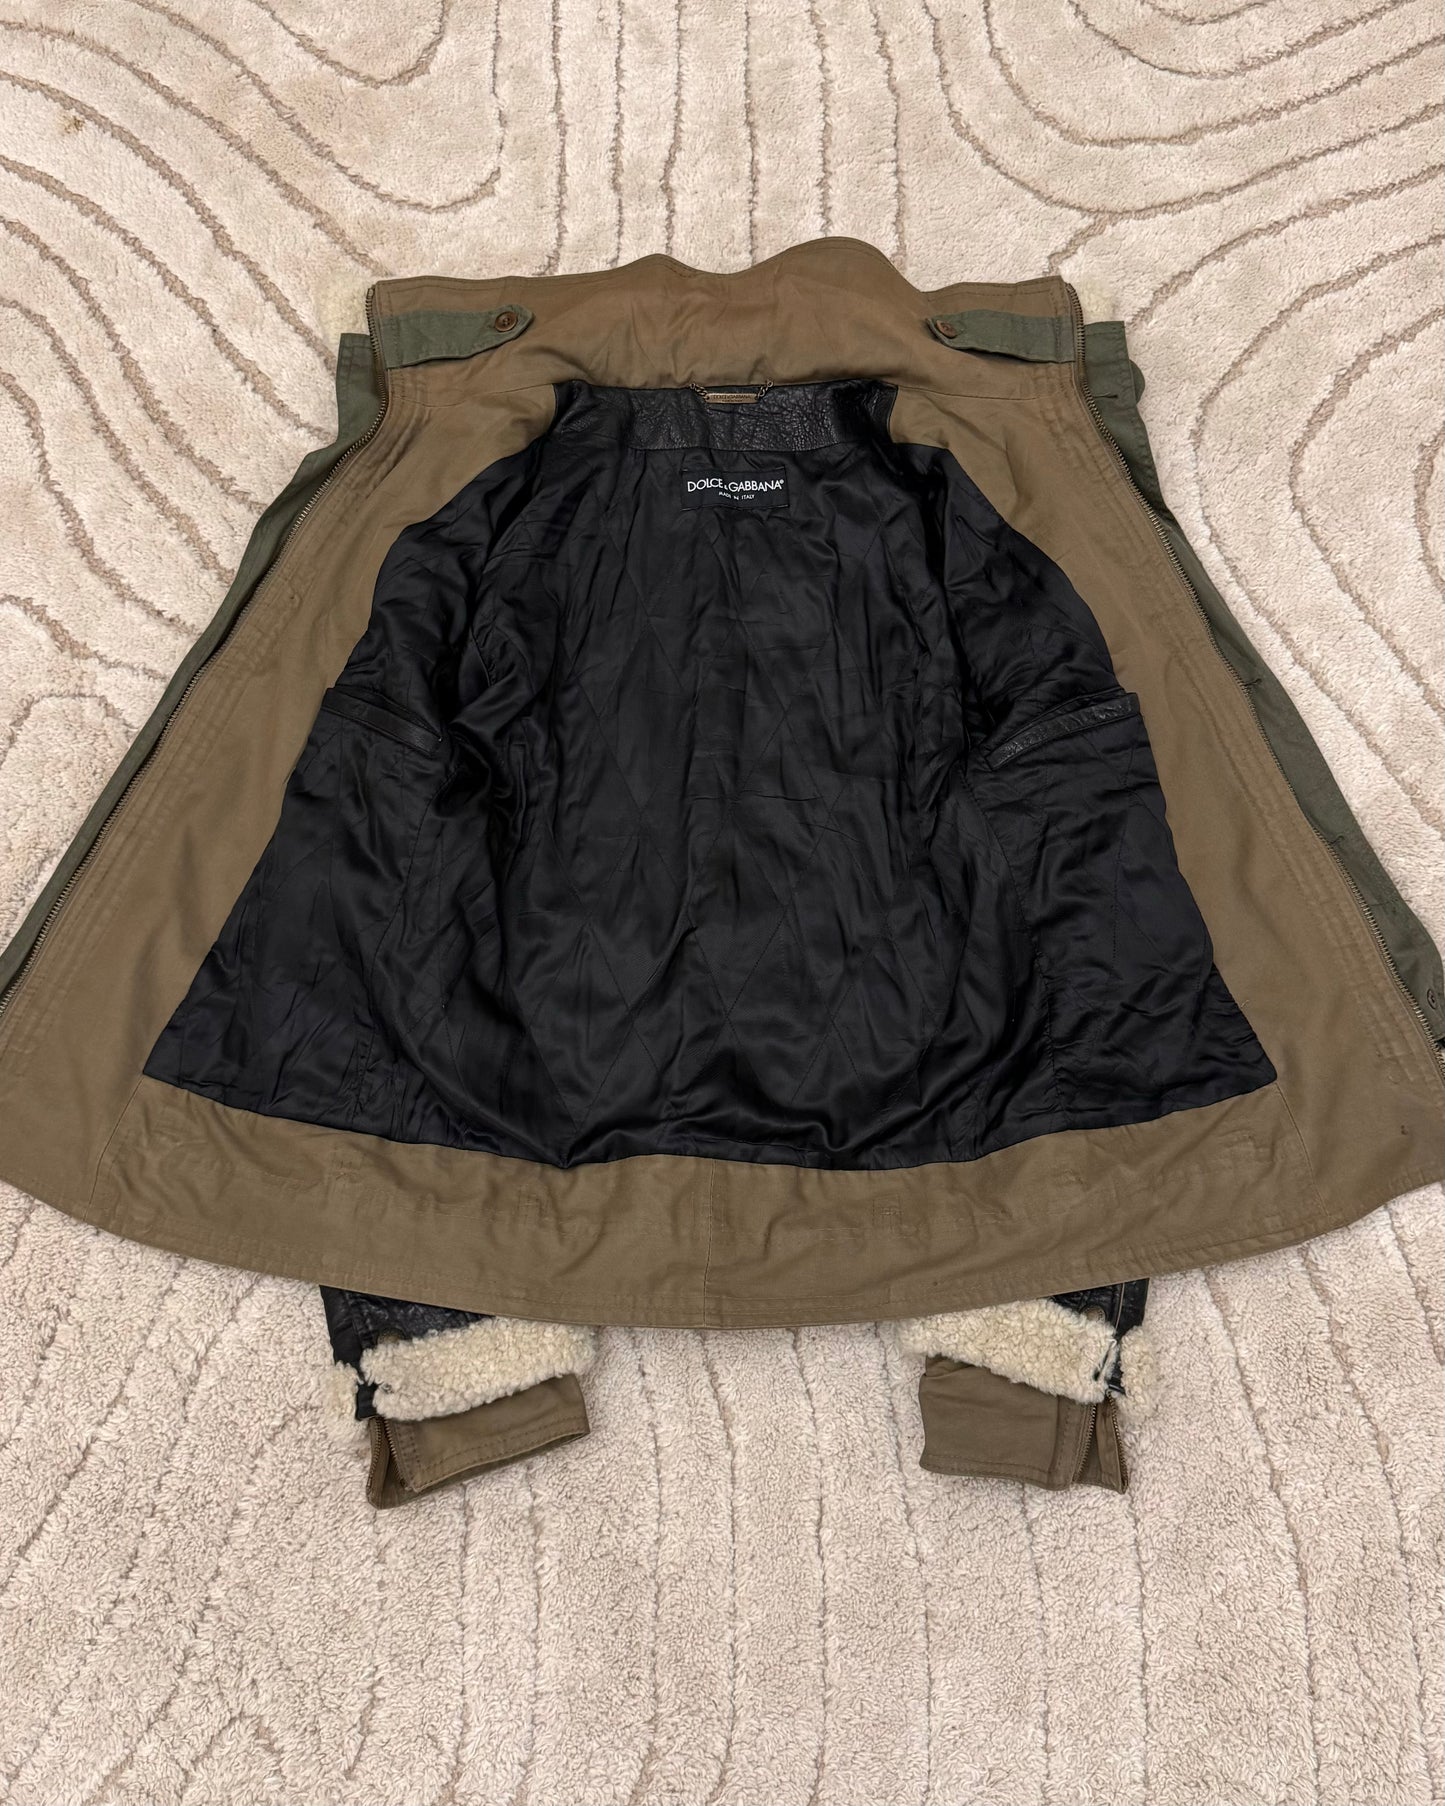 FW2005 Dolce & Gabbana Heavy Shearling Army Combat Jacket (M/L)